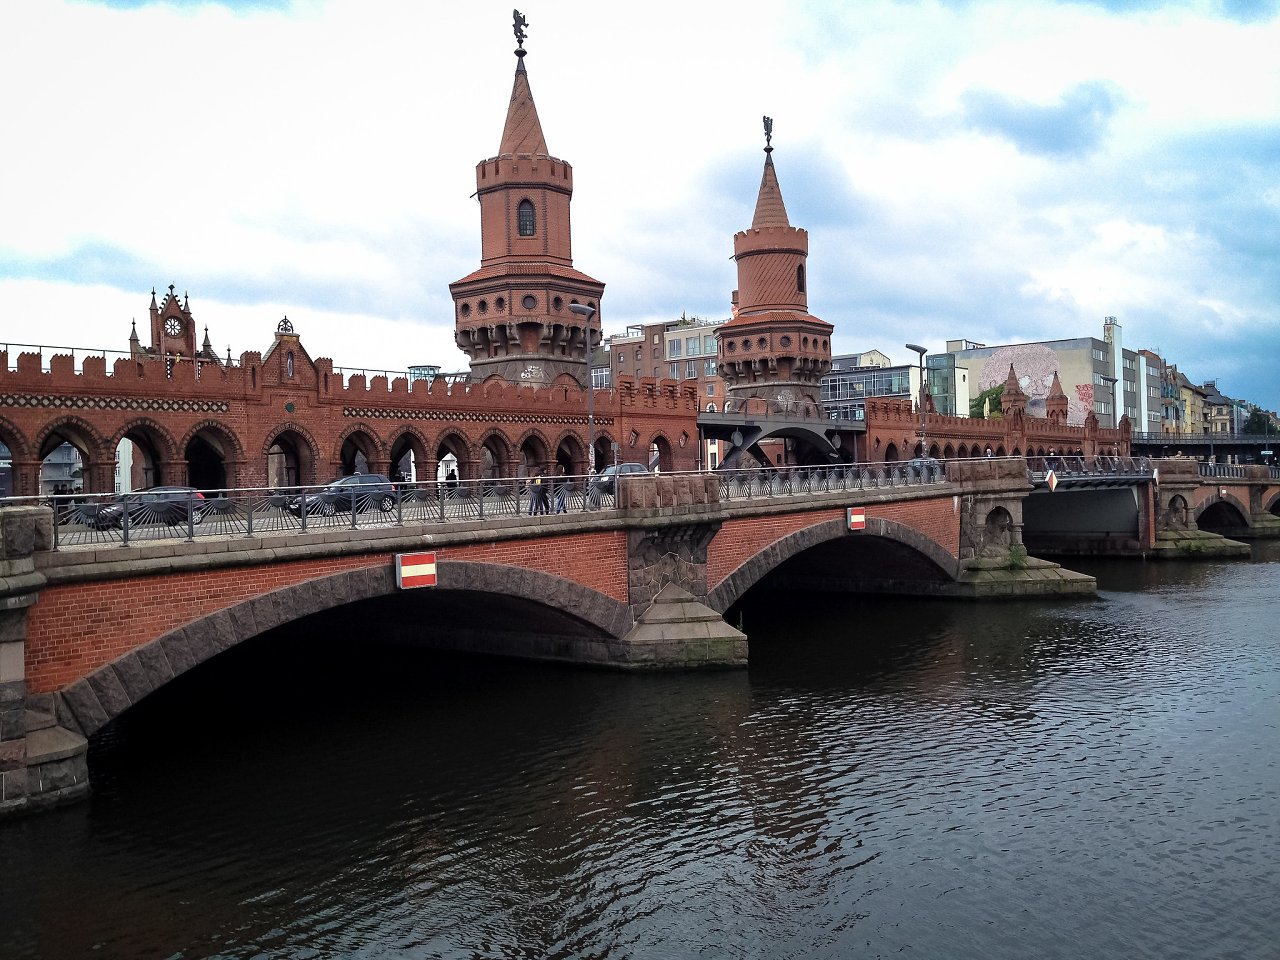 Oberbaum Bridge, Berlin Attractions, Germany